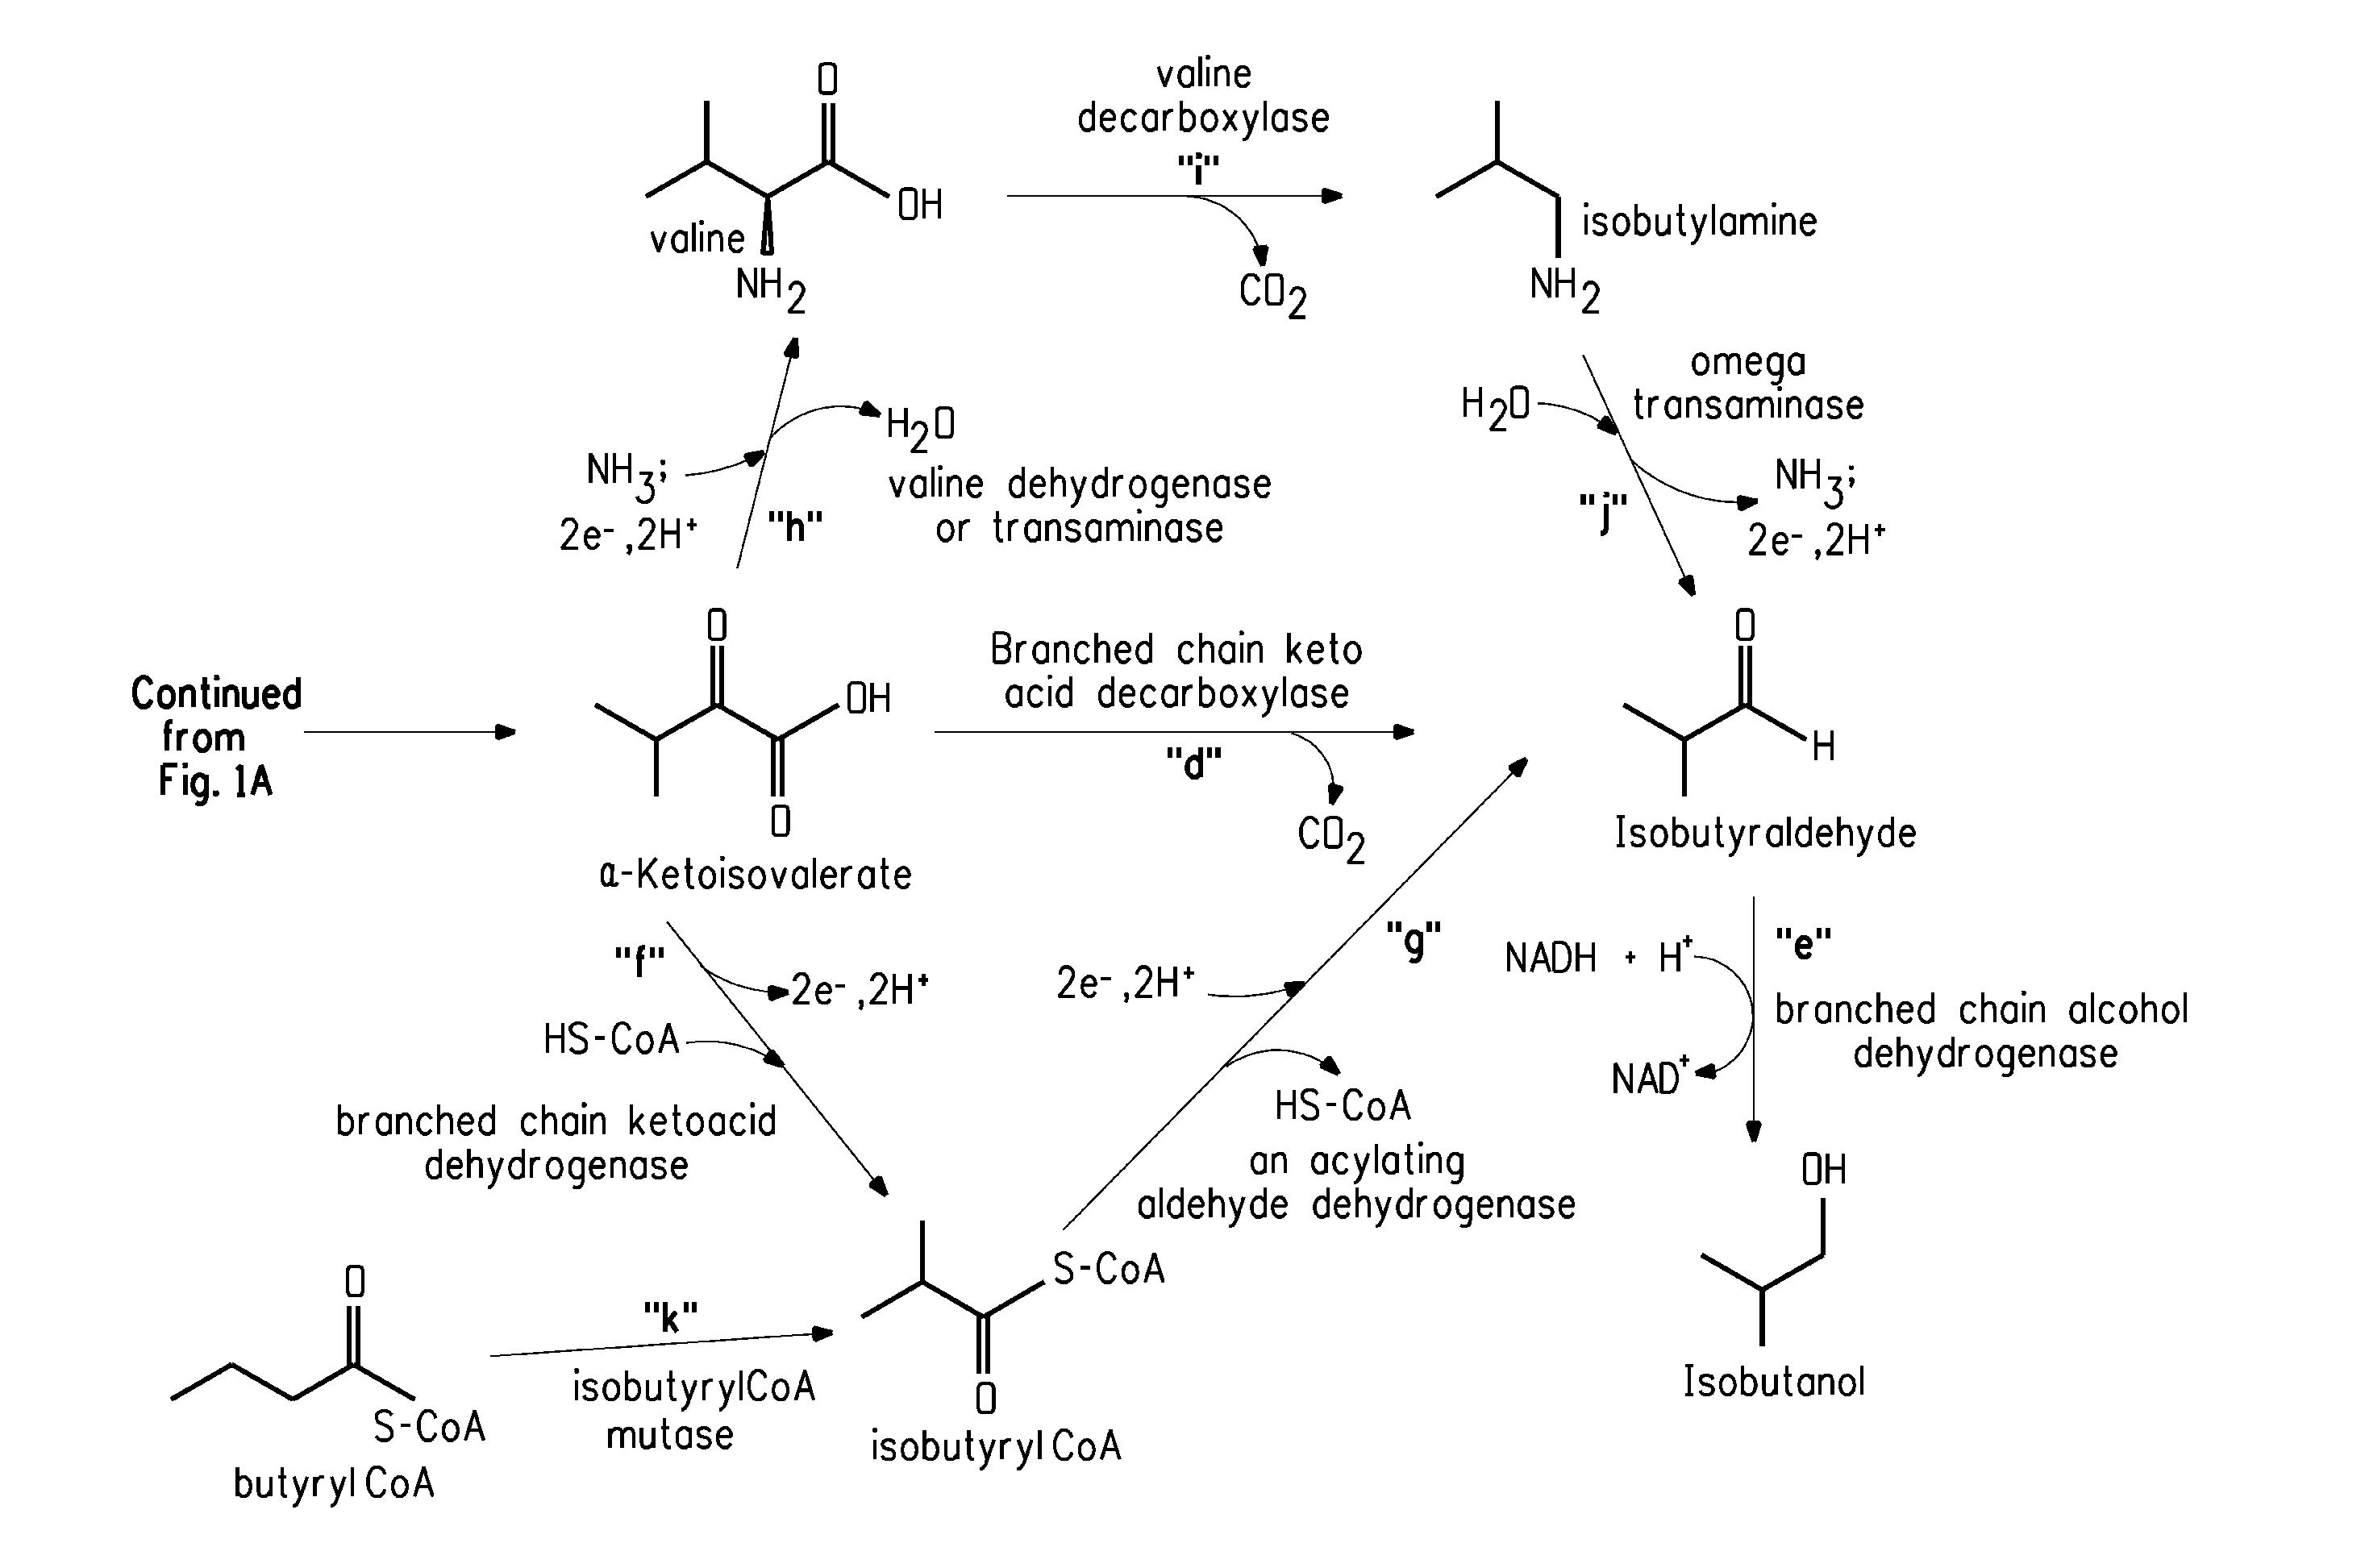 Fermentive production of isobutanol using highly active ketol-acid reductoisomerase enzymes